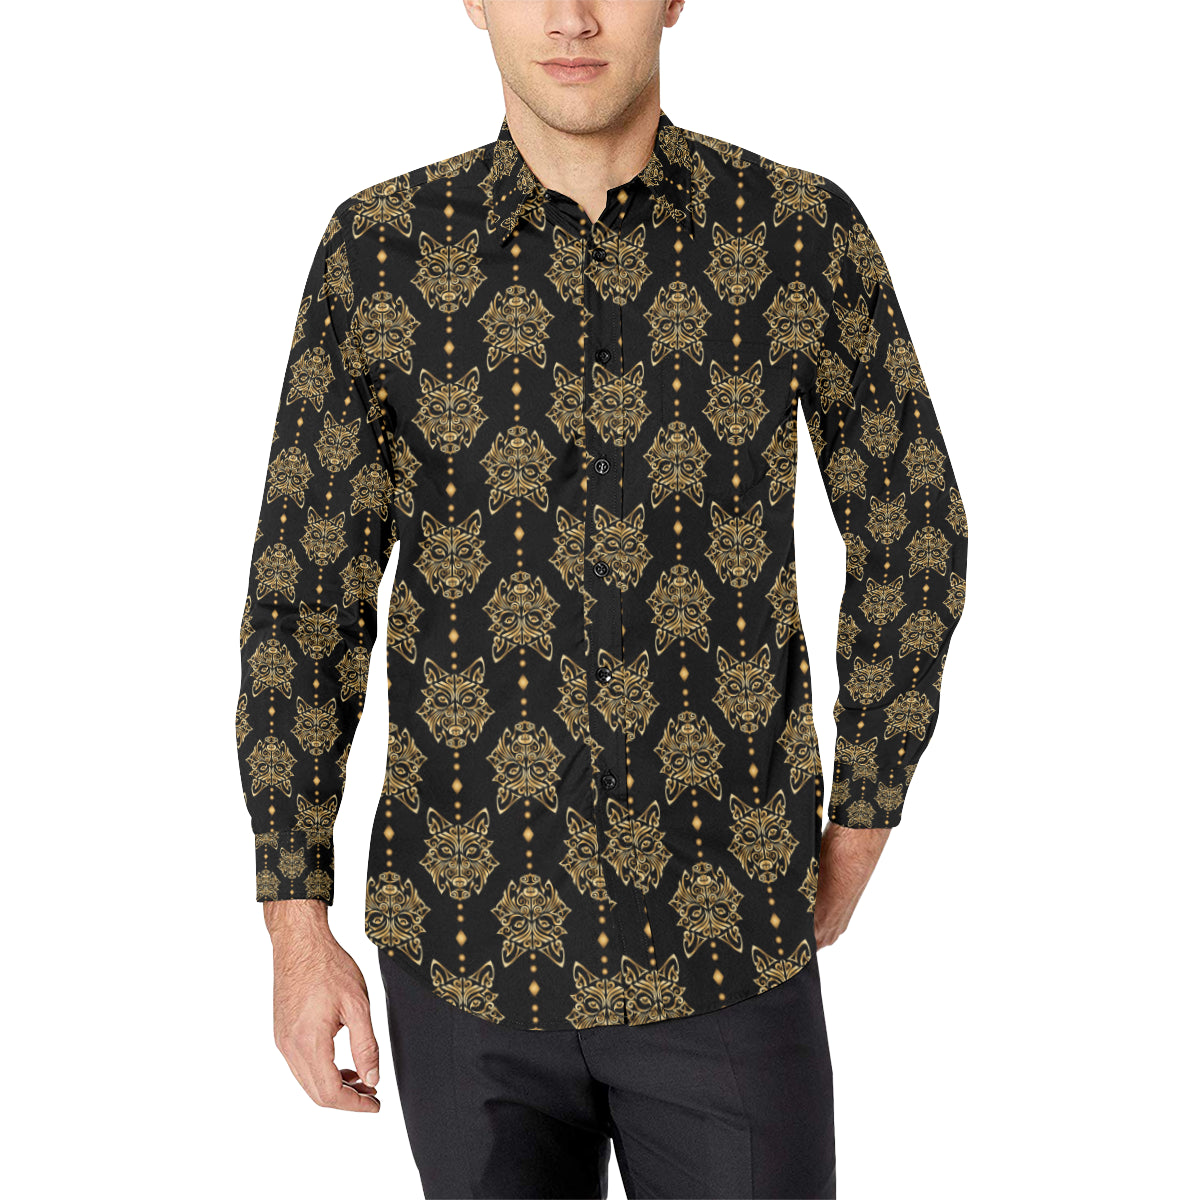 Aztec Wolf Pattern Print Design 04 Men's Long Sleeve Shirt